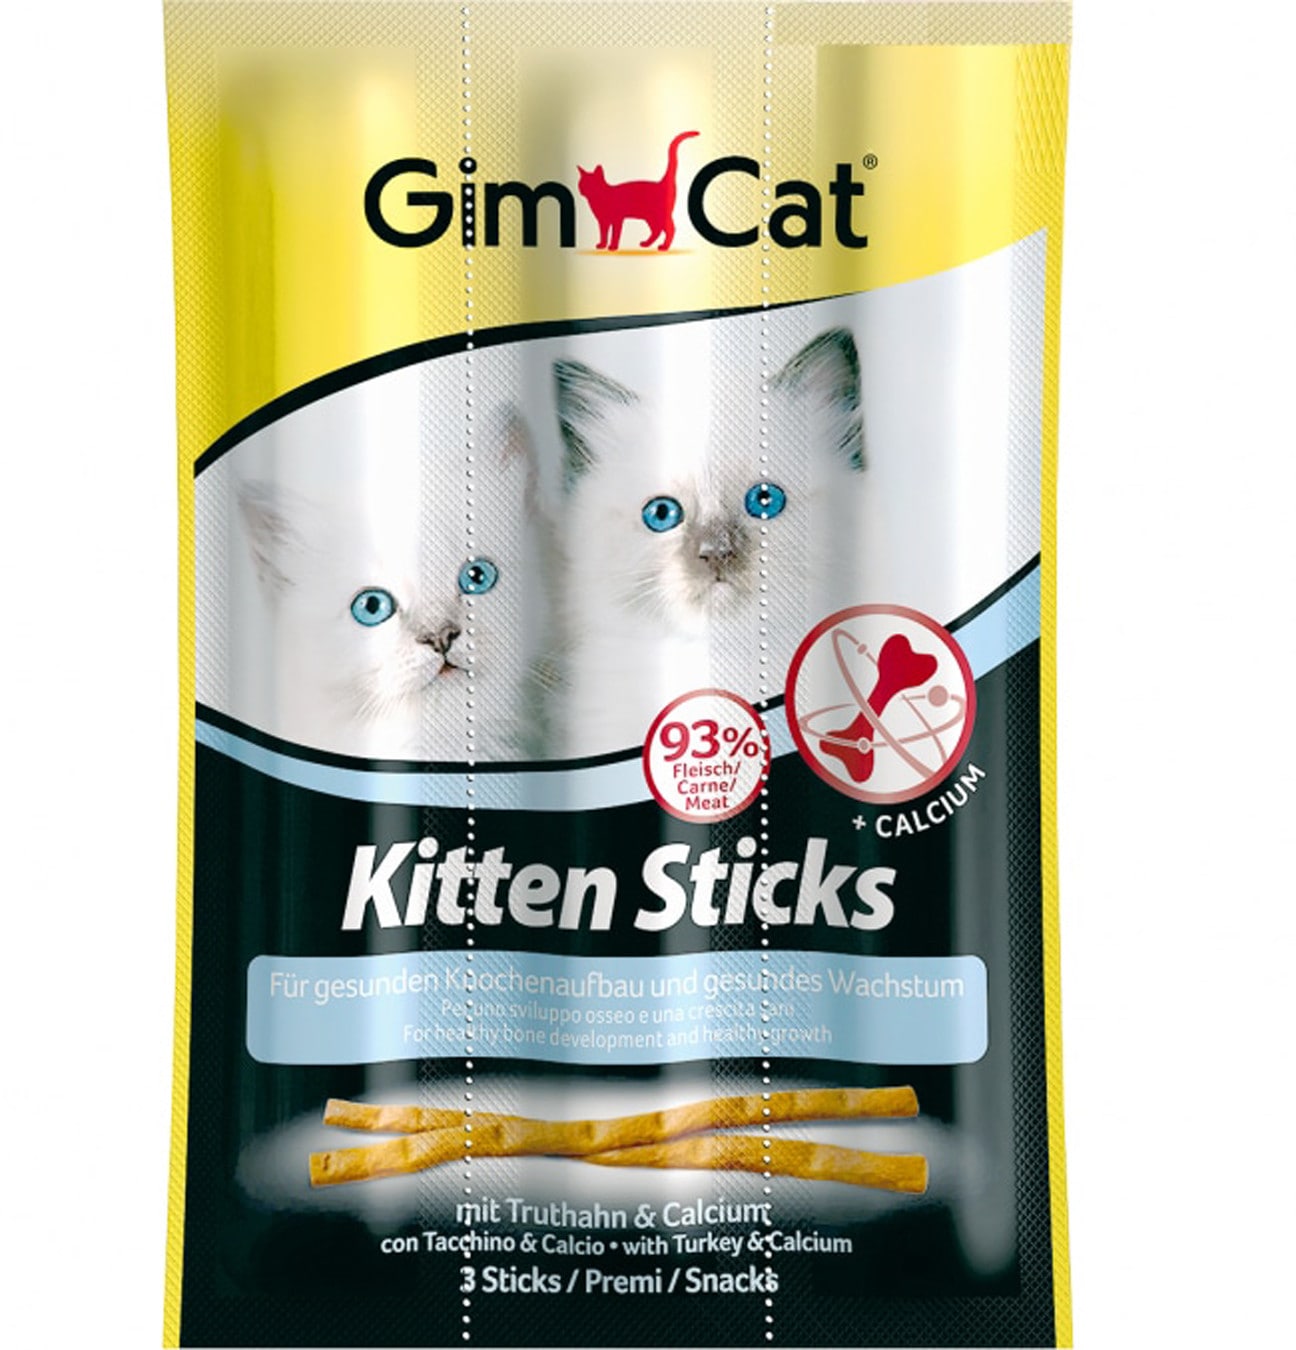 GimCat Kitten Sticks with Turkey & Calcium Cat Treats, 3g, Pack of 3